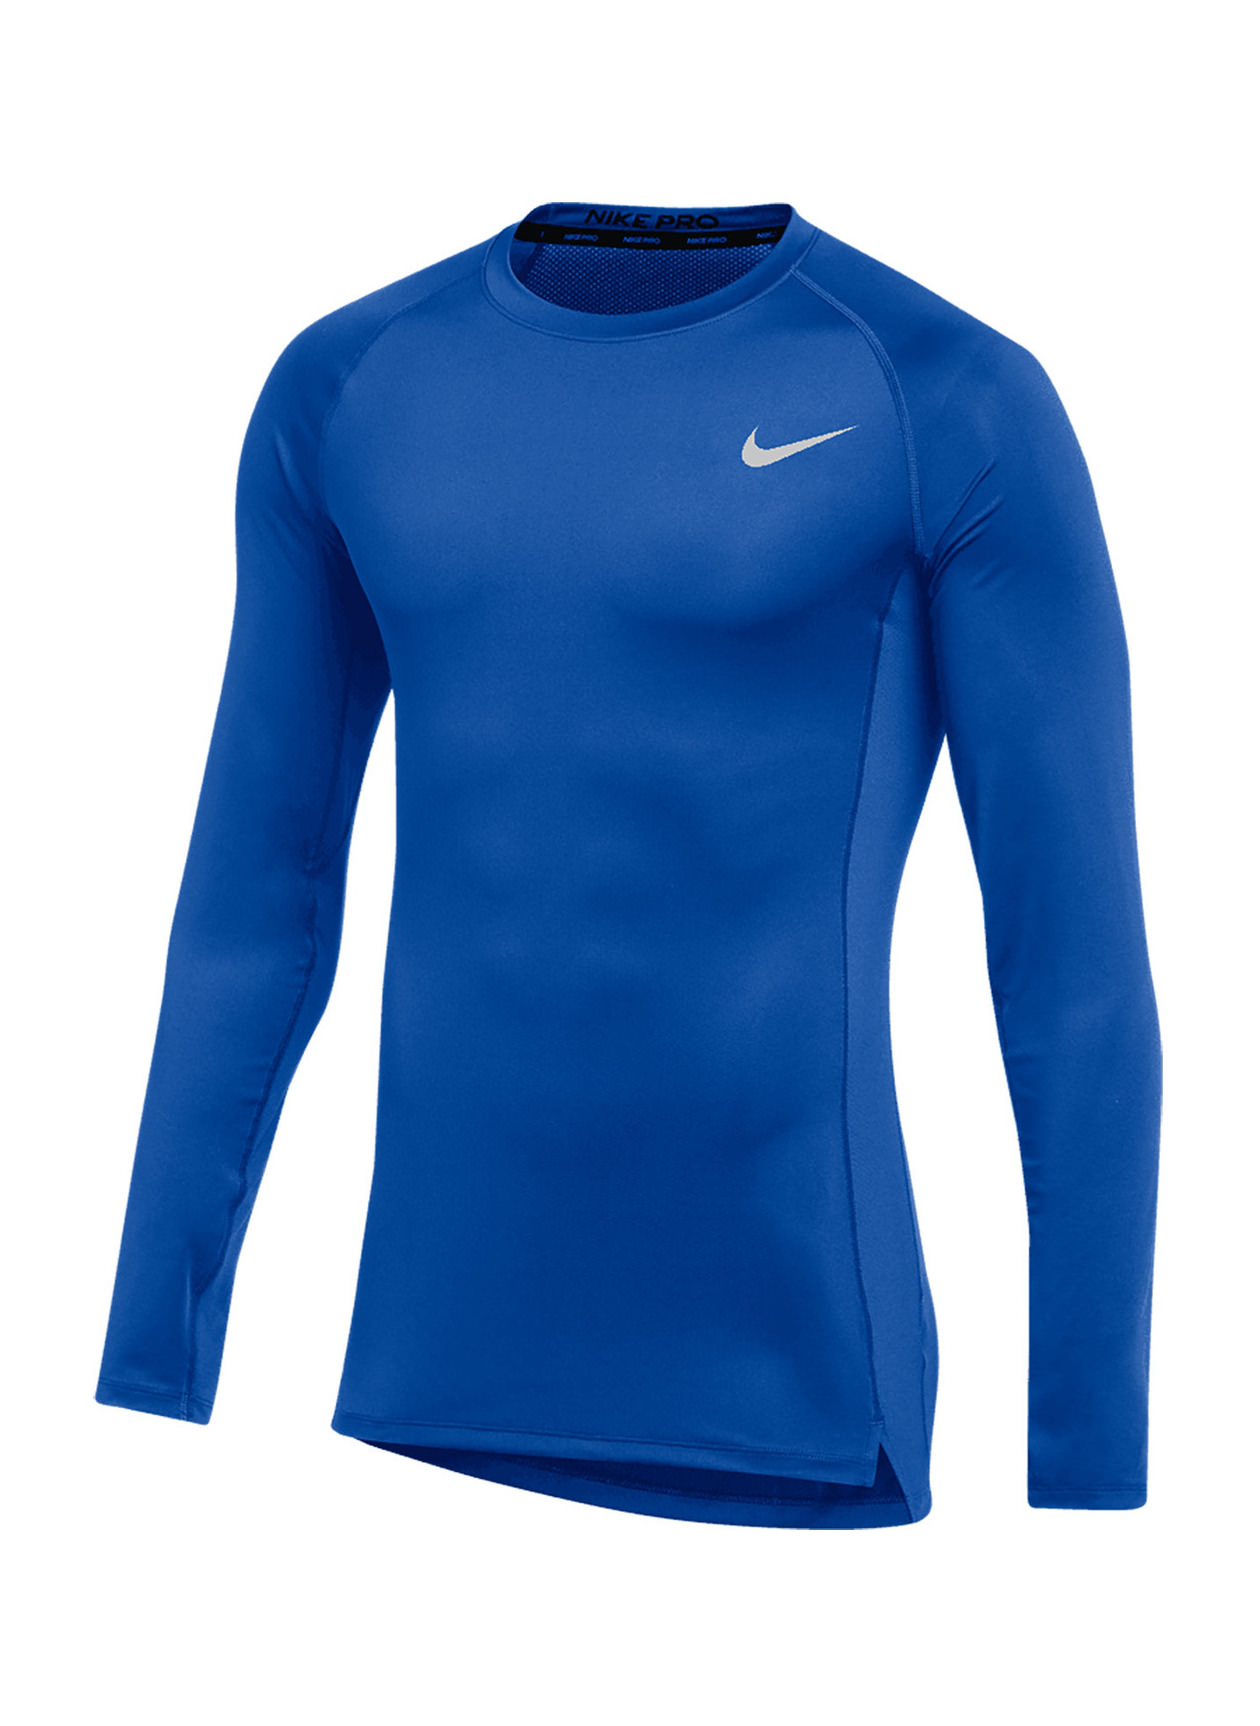 Men's Nike Long Sleeve Shirts